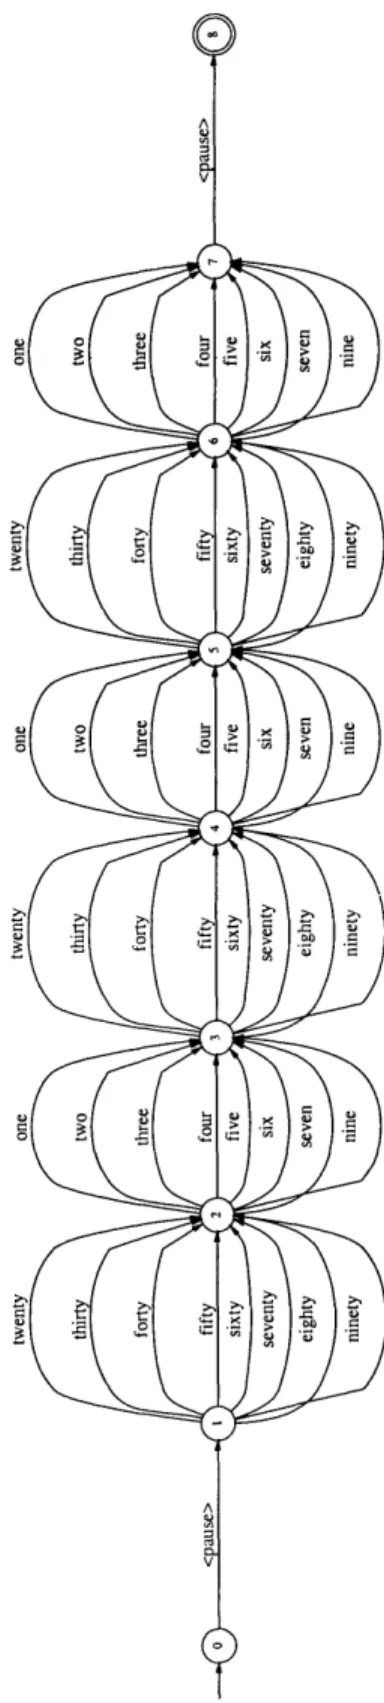 Figure  4-1:  Finite  state  network  illustrating  constrained  grammar  for  YOHO